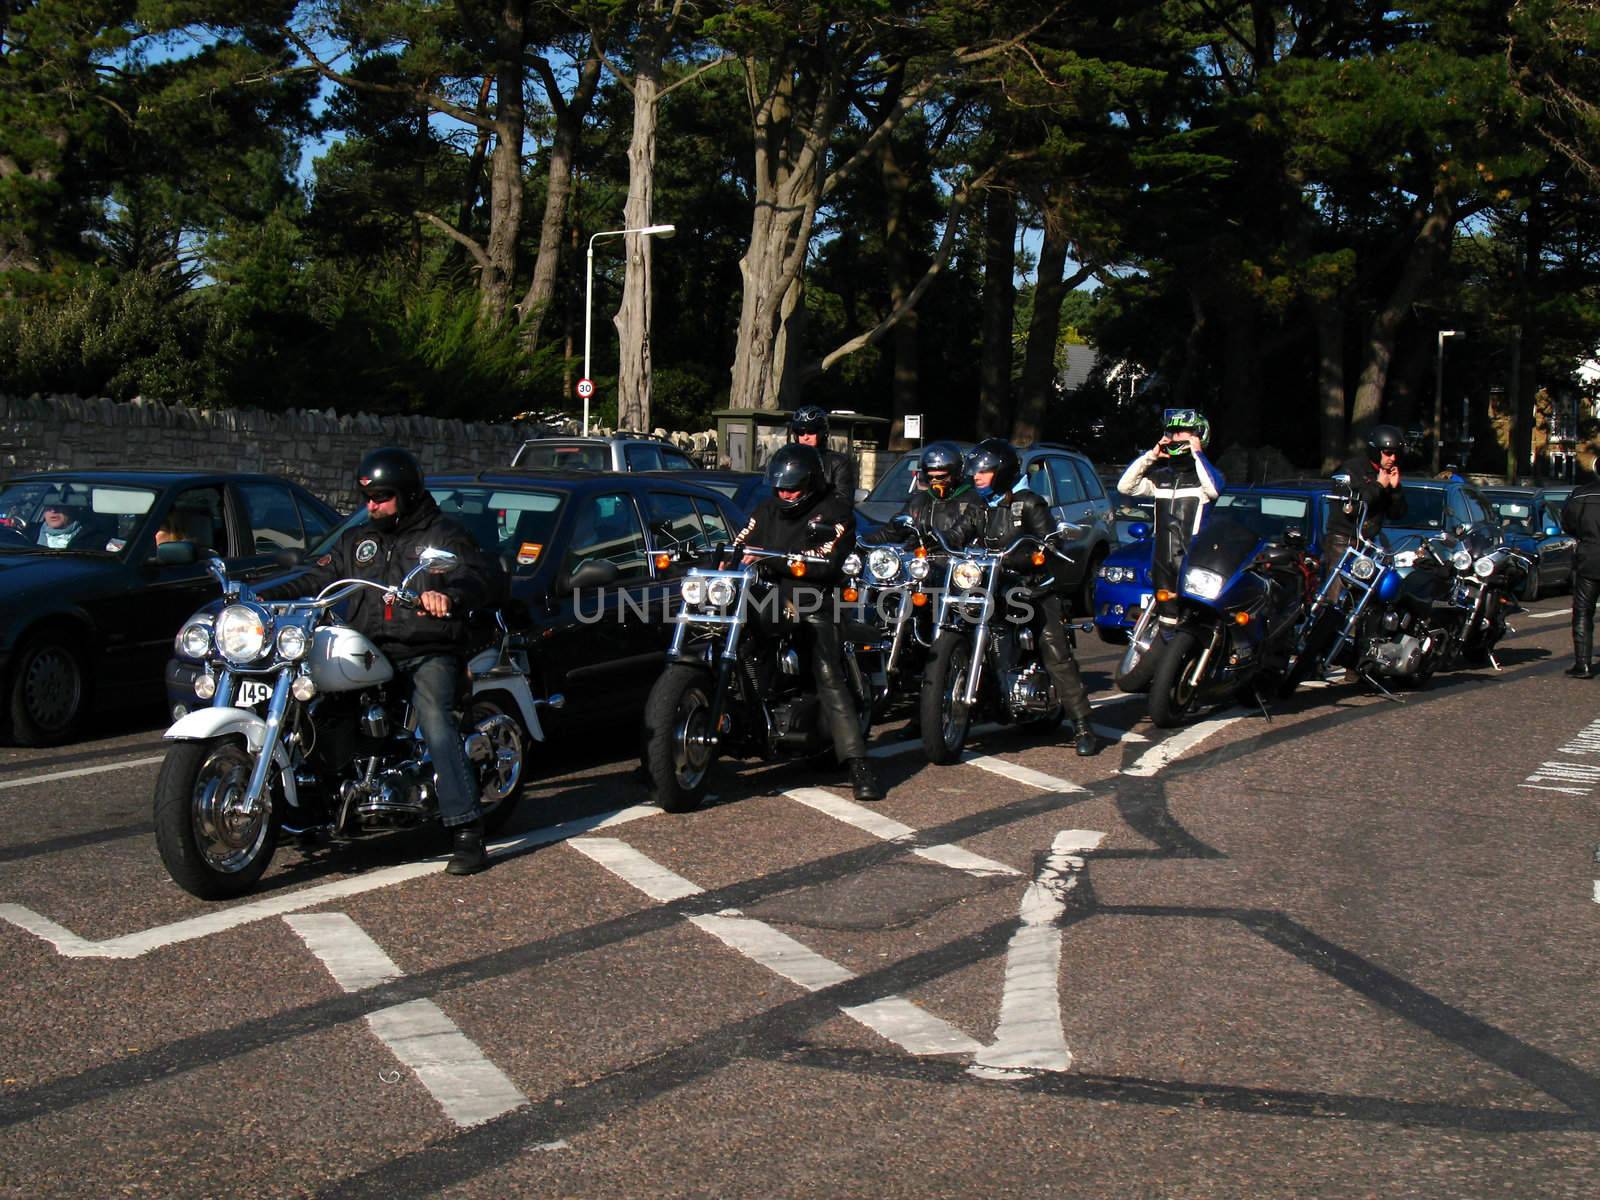 Bikers queuing for the Sandbanks Ferry in Dorset